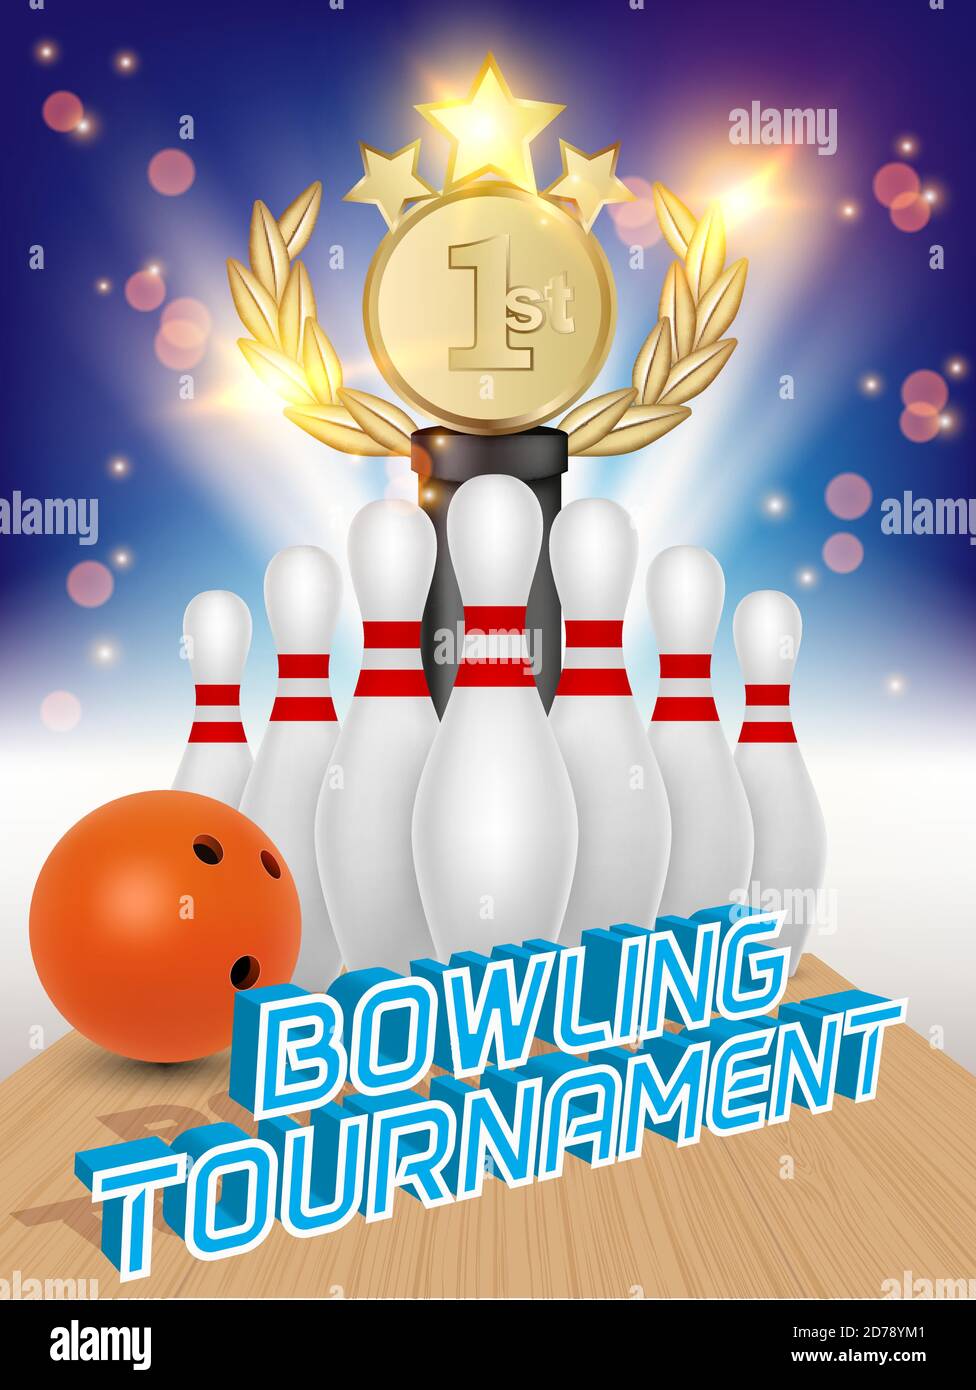 Bowling Turnier Poster Vektor realistische Illustration Stock-Vektorgrafik  - Alamy